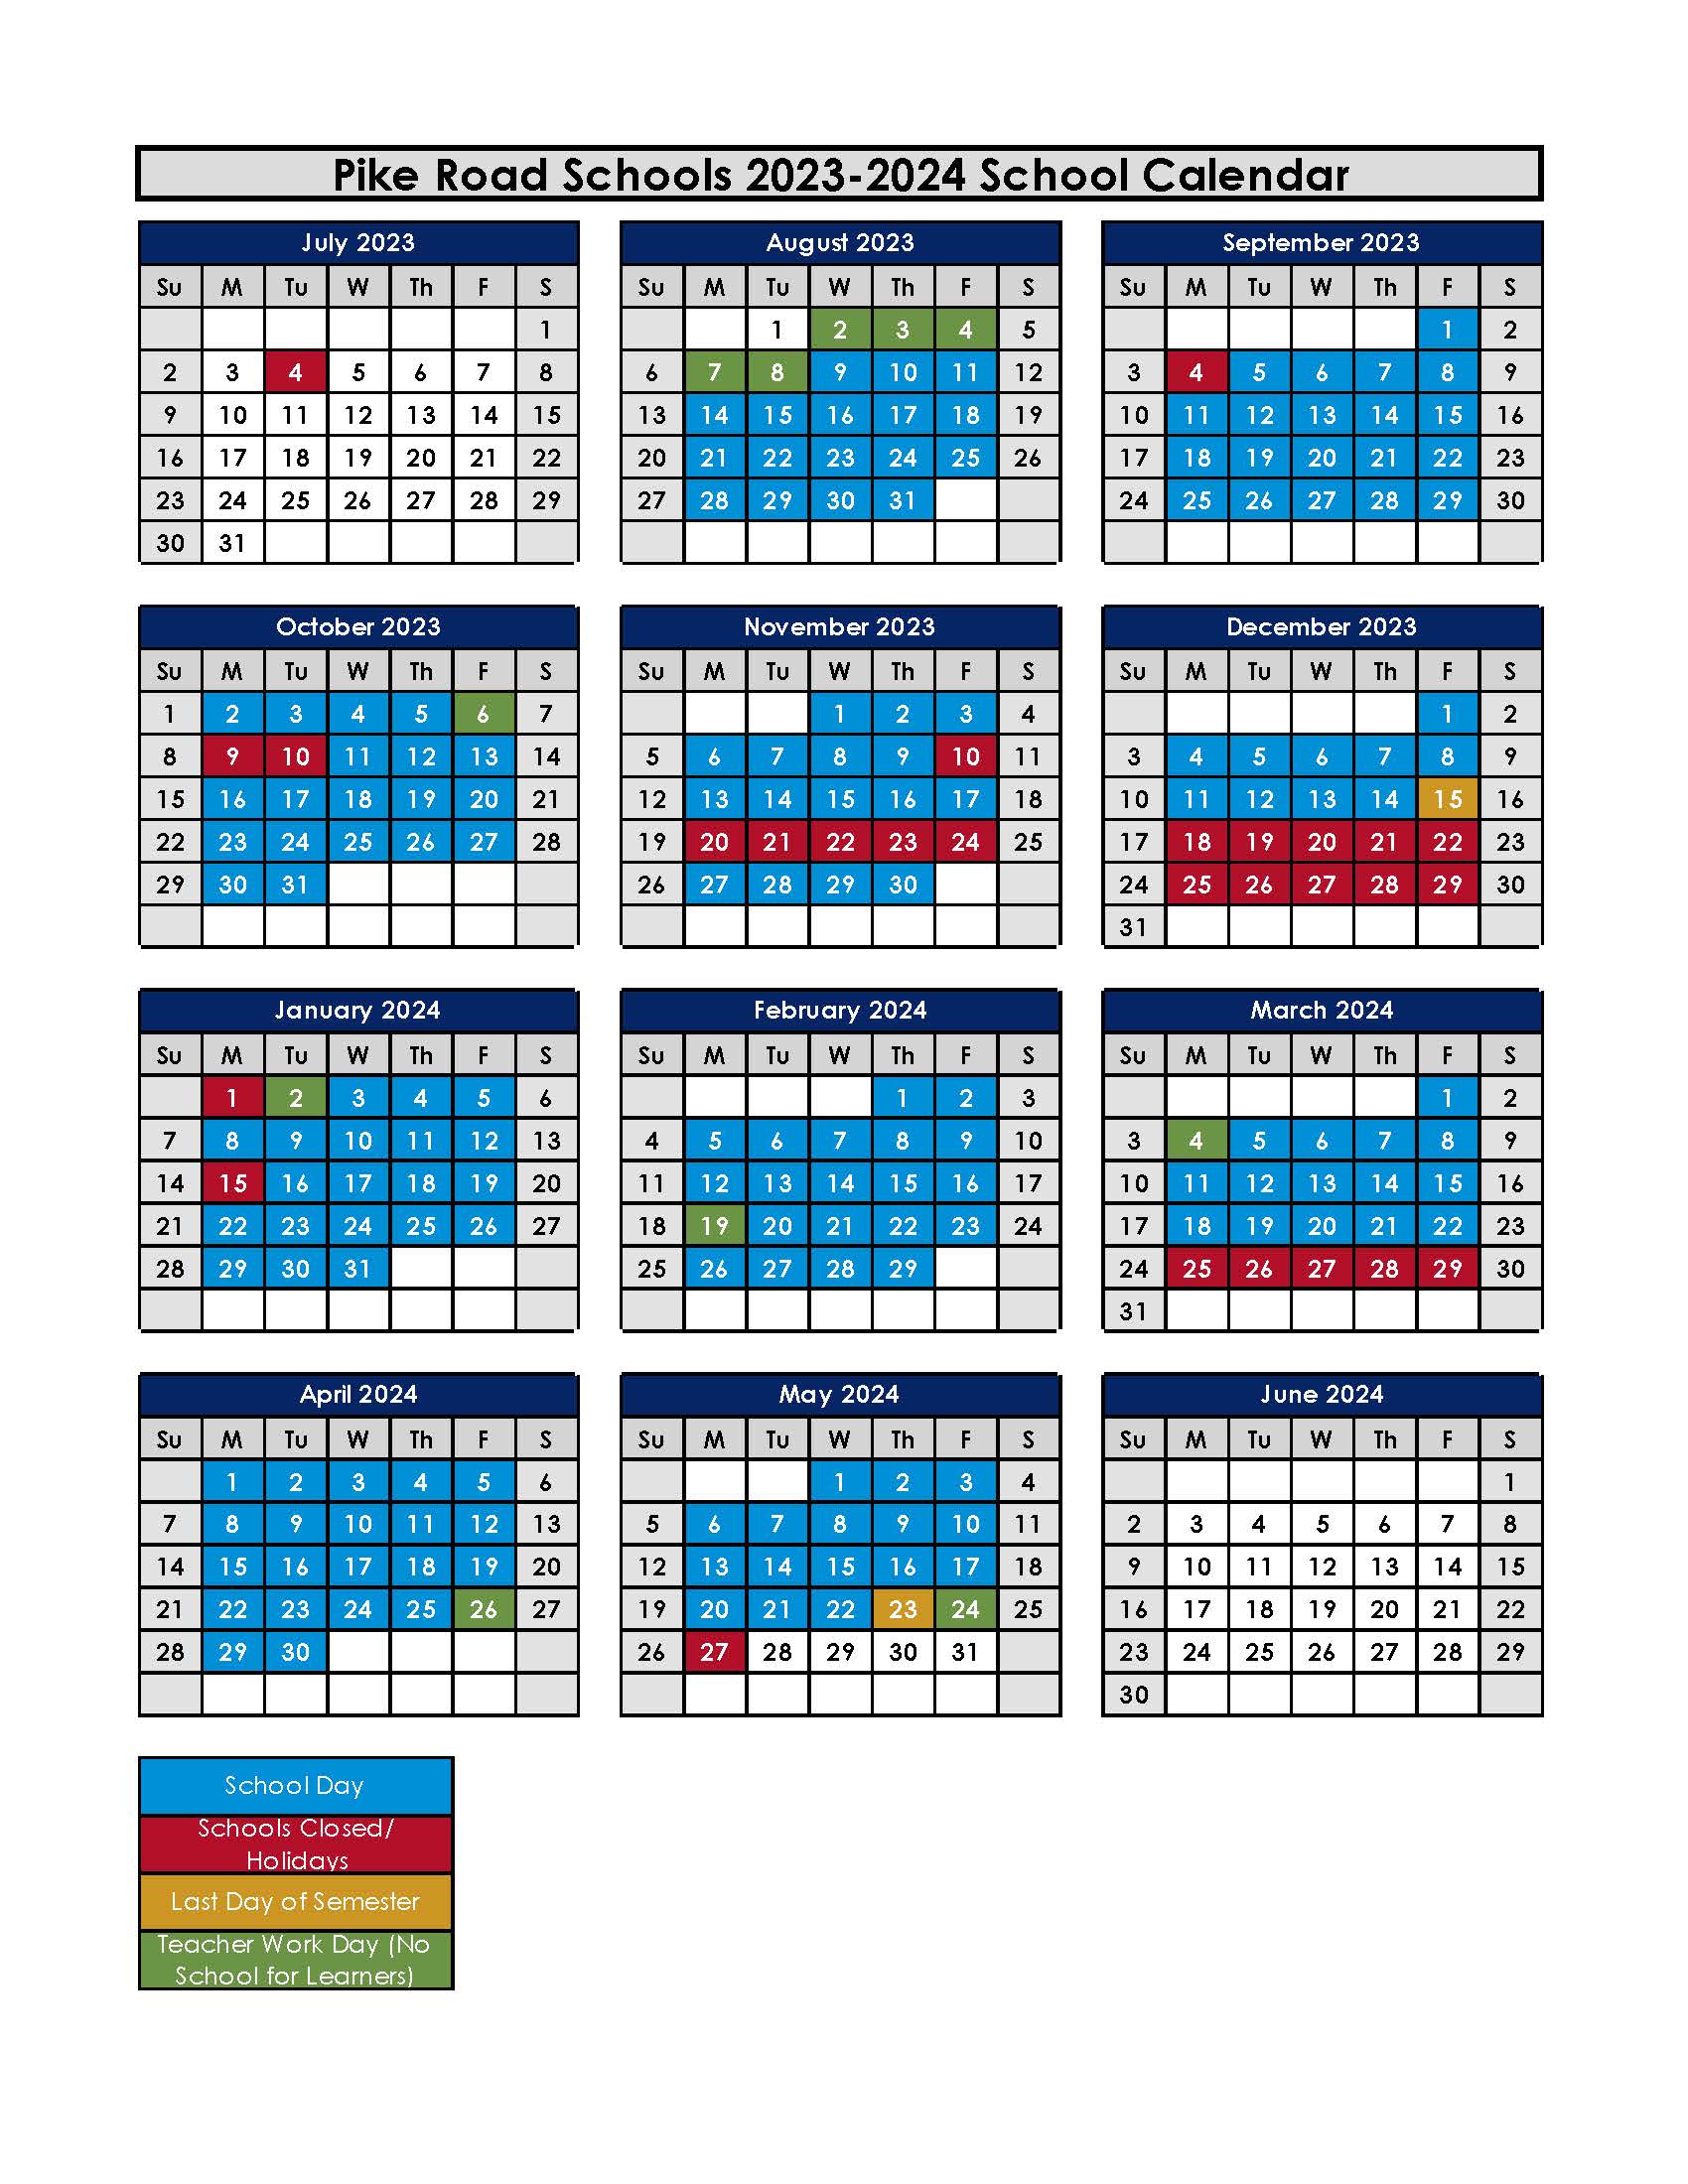 pike-road-schools-calendar-2024-publicholidays